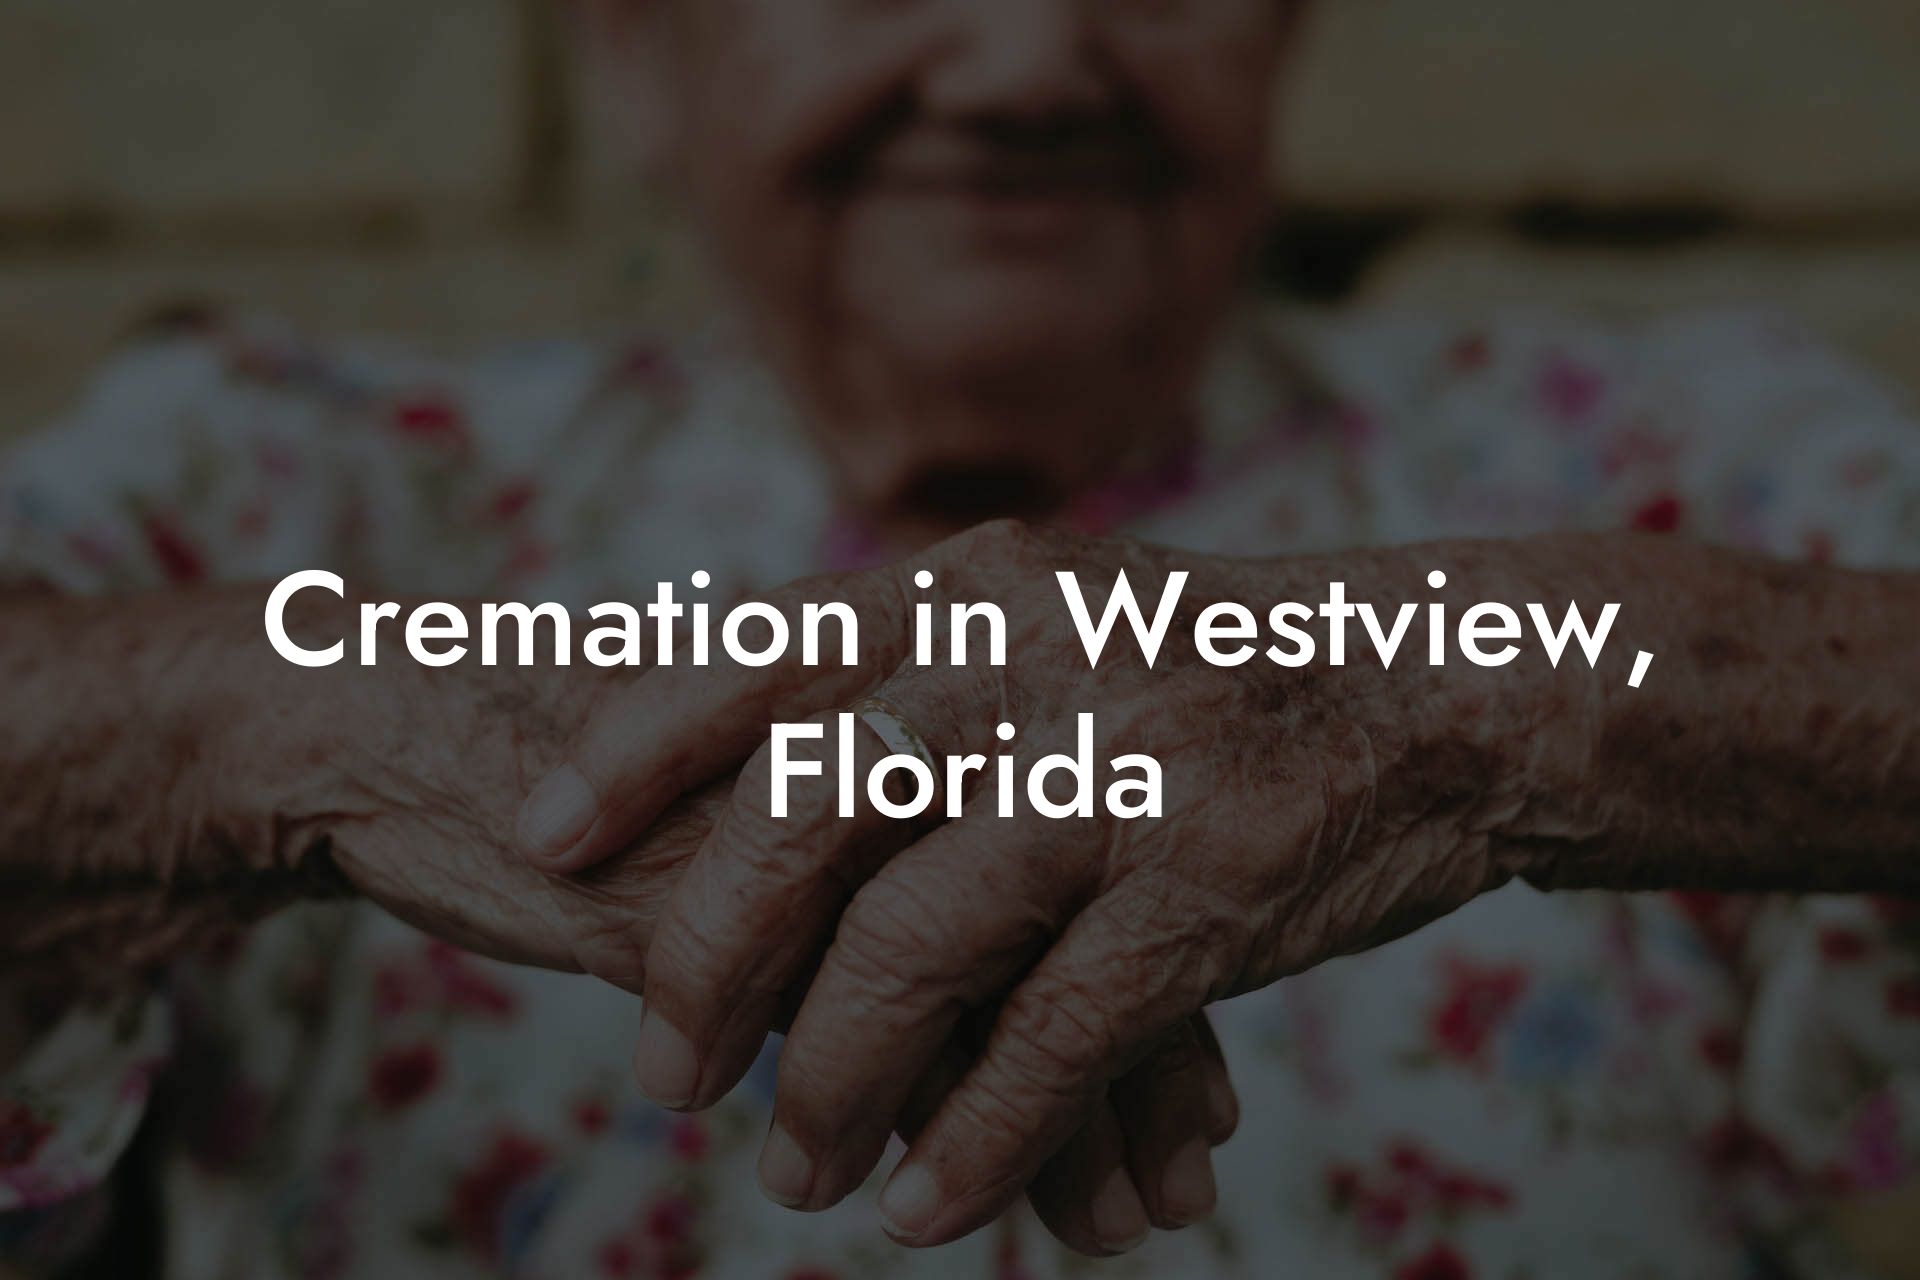 Cremation in Westview, Florida